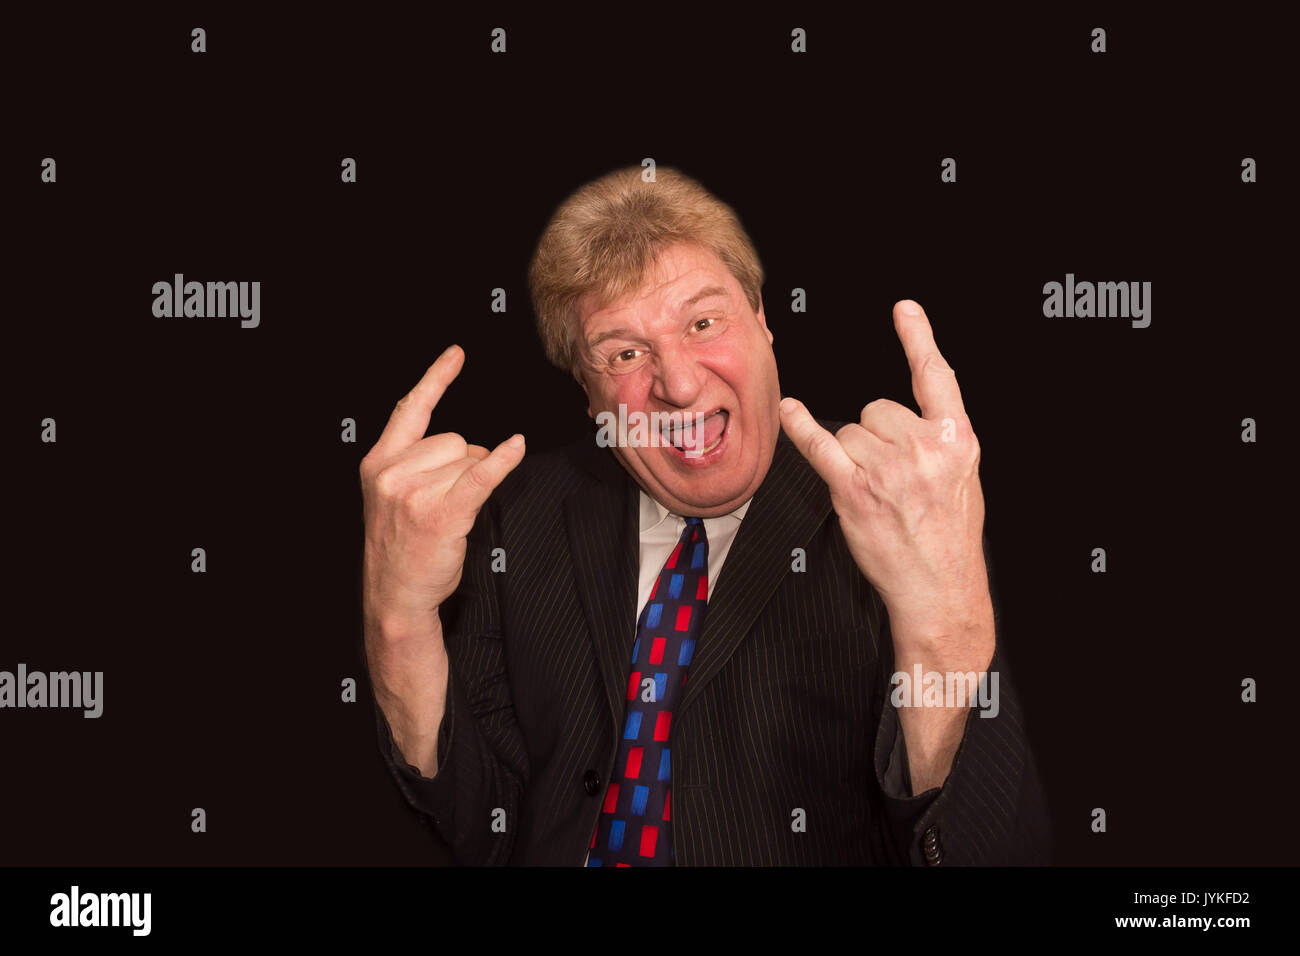 elderly-man-making-a-horns-gesture-depicting-heavy-metal-rock-music-JYKFD